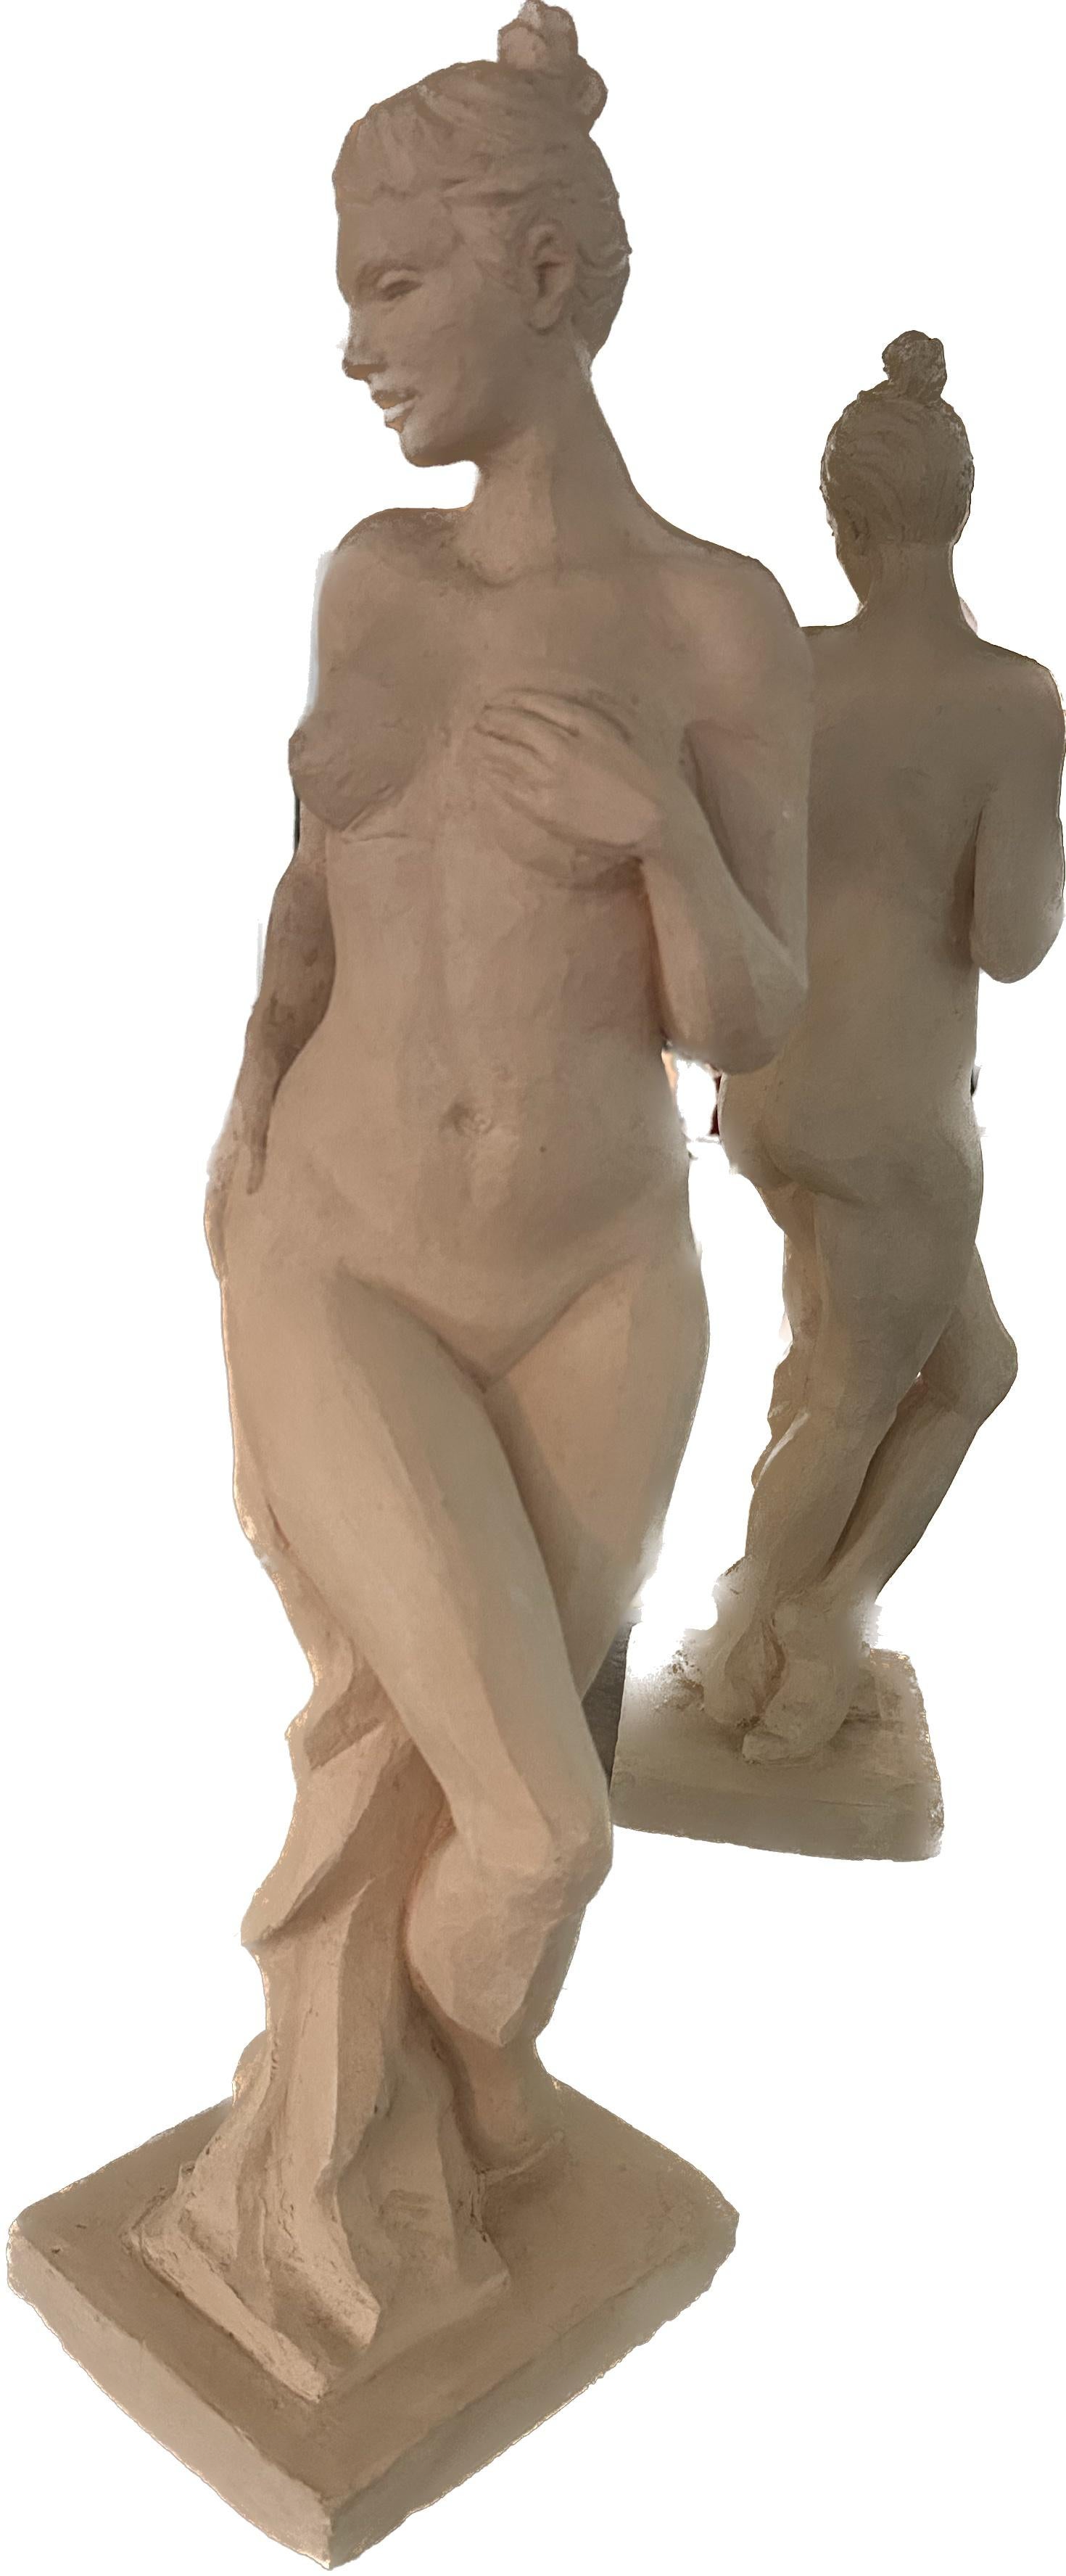 Nude Figure, Sculpture, Ceramic Handmade by Garo, One of a Kind